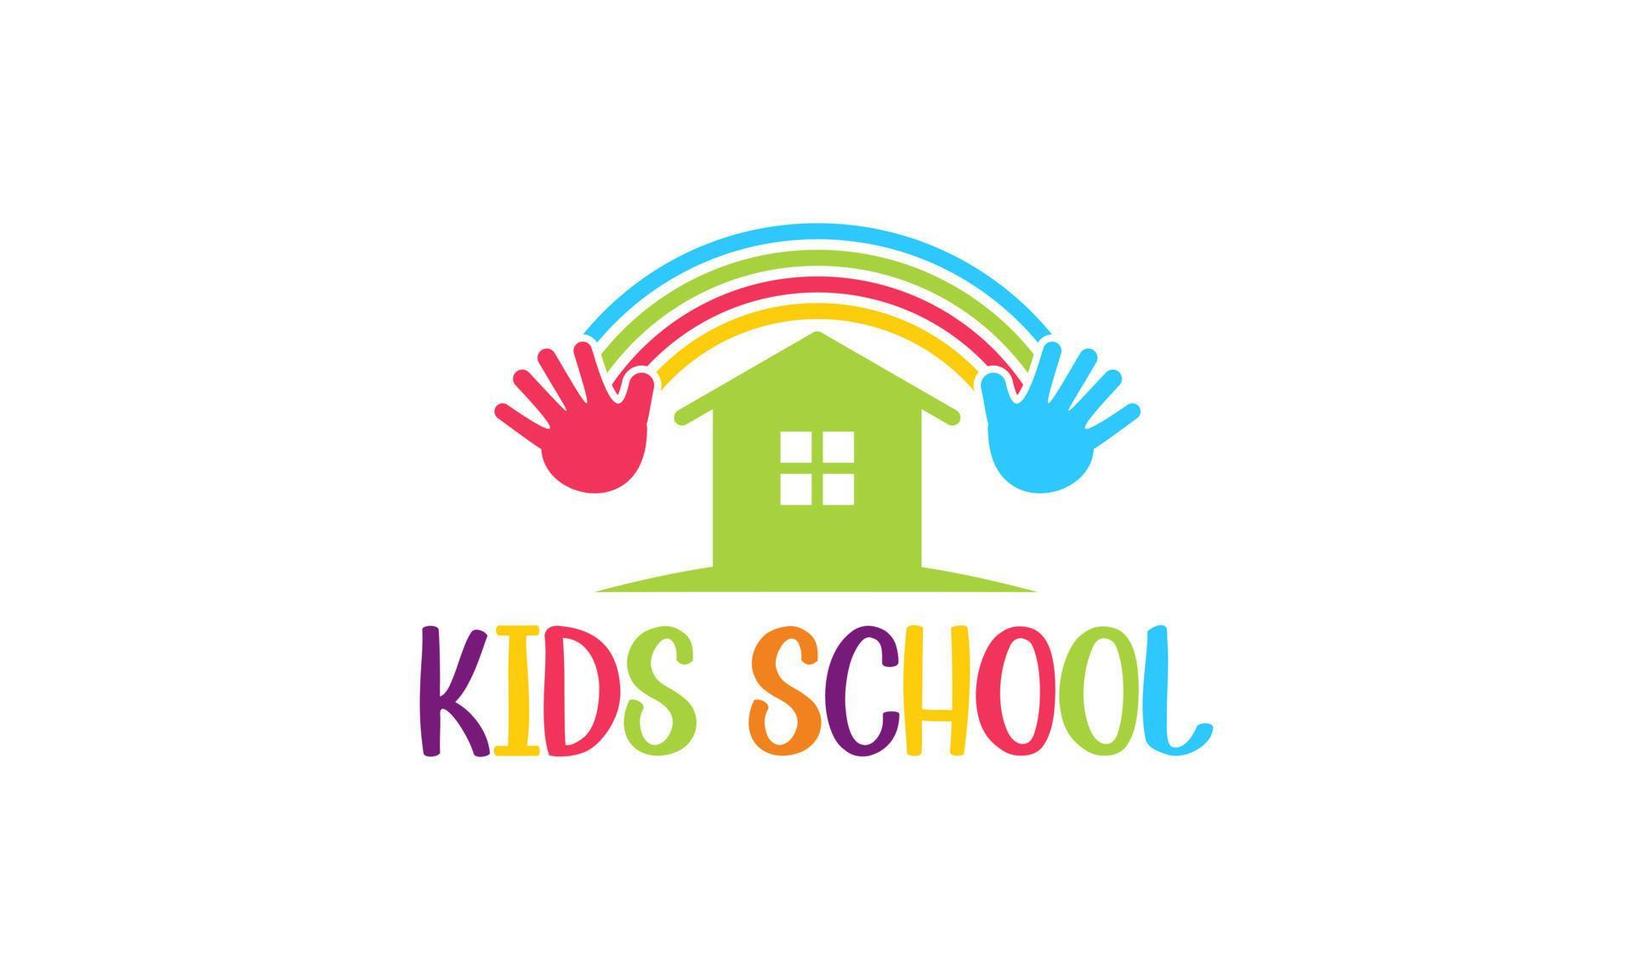 Kiddie school elementary colorful vector logo design illustration